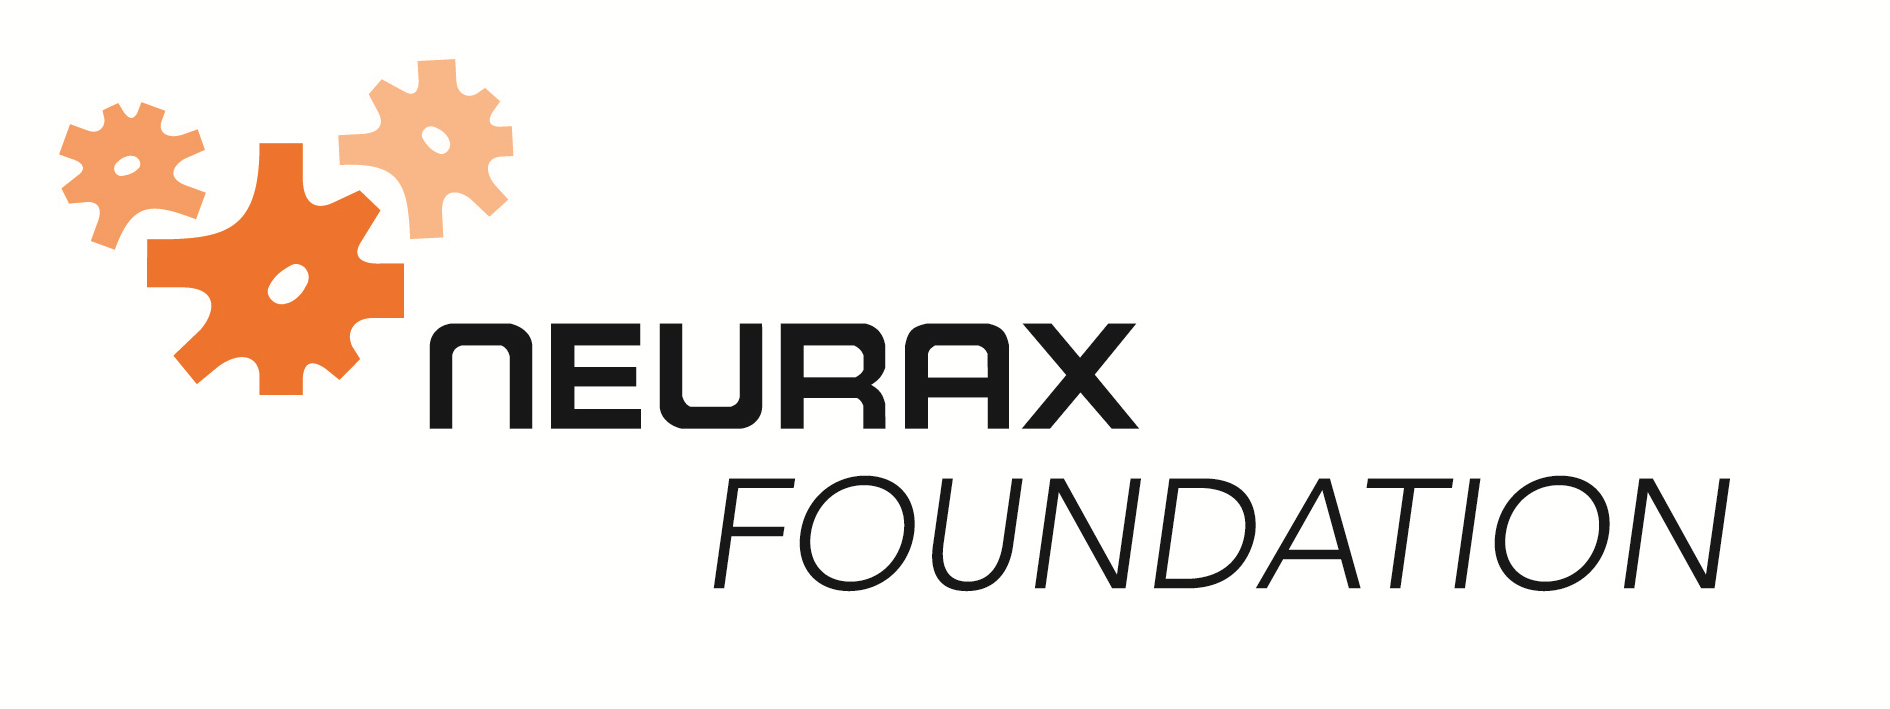 Neurax Foundation